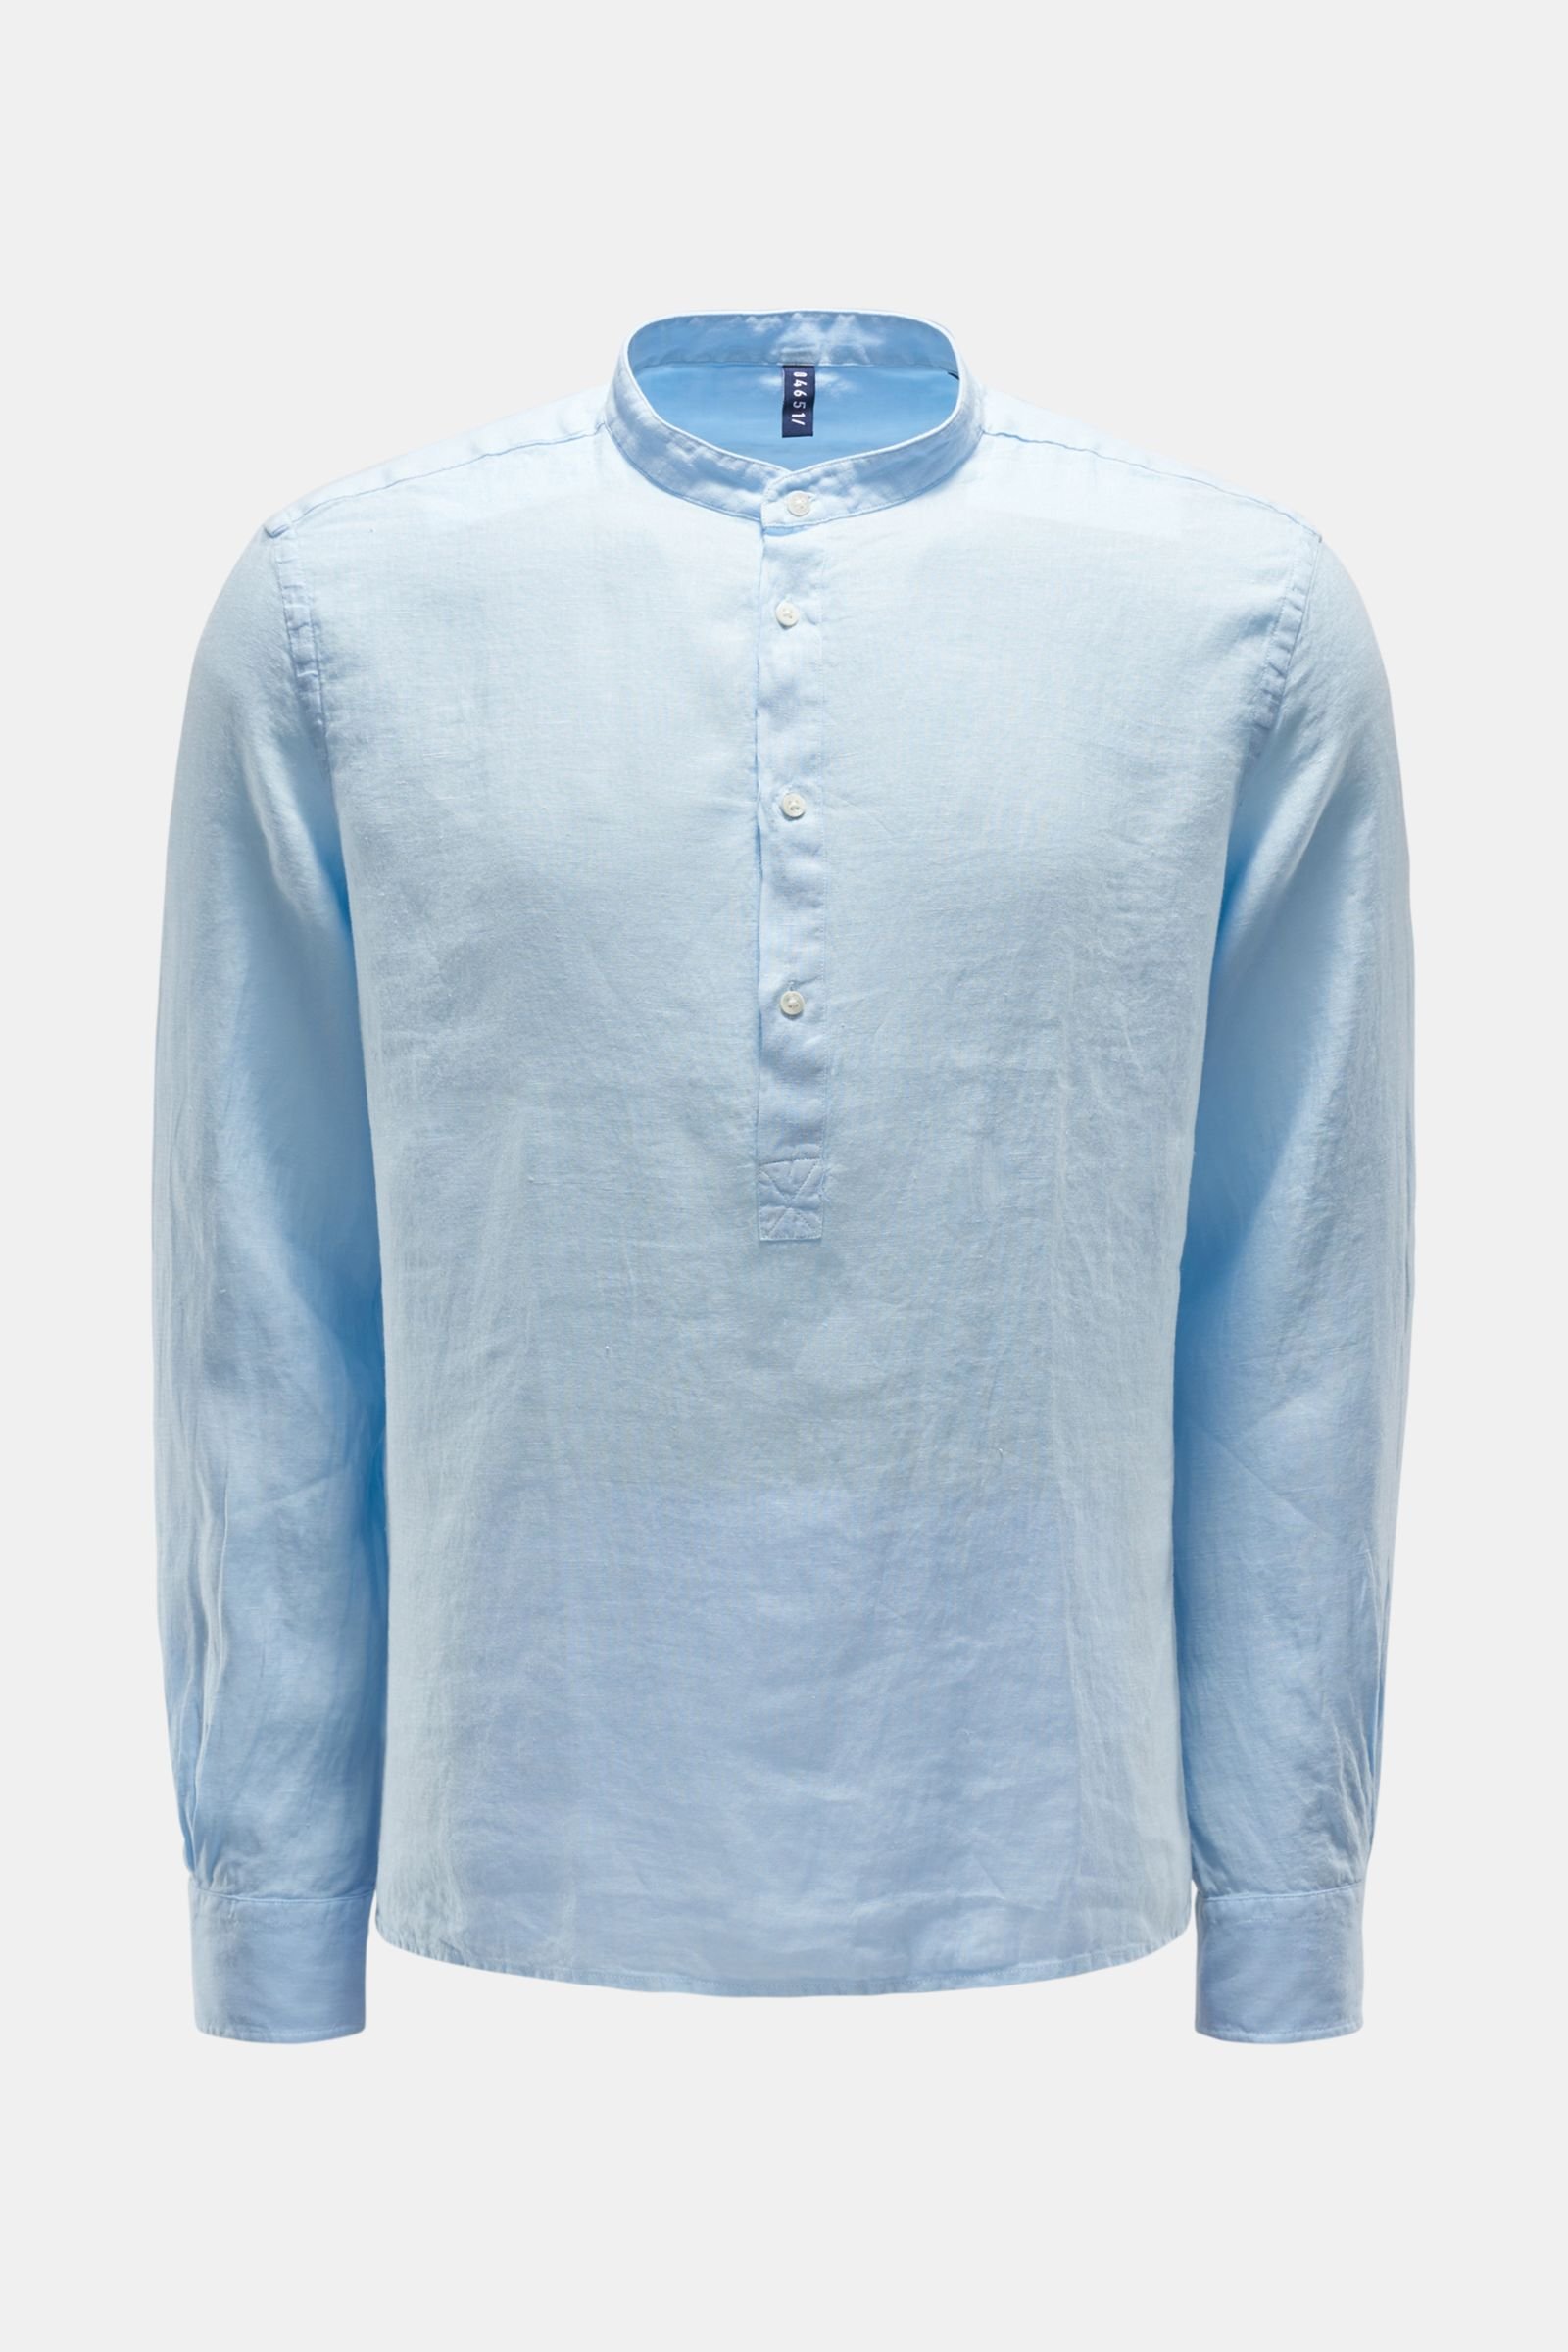 Popover shirt grandad collar pastel blue